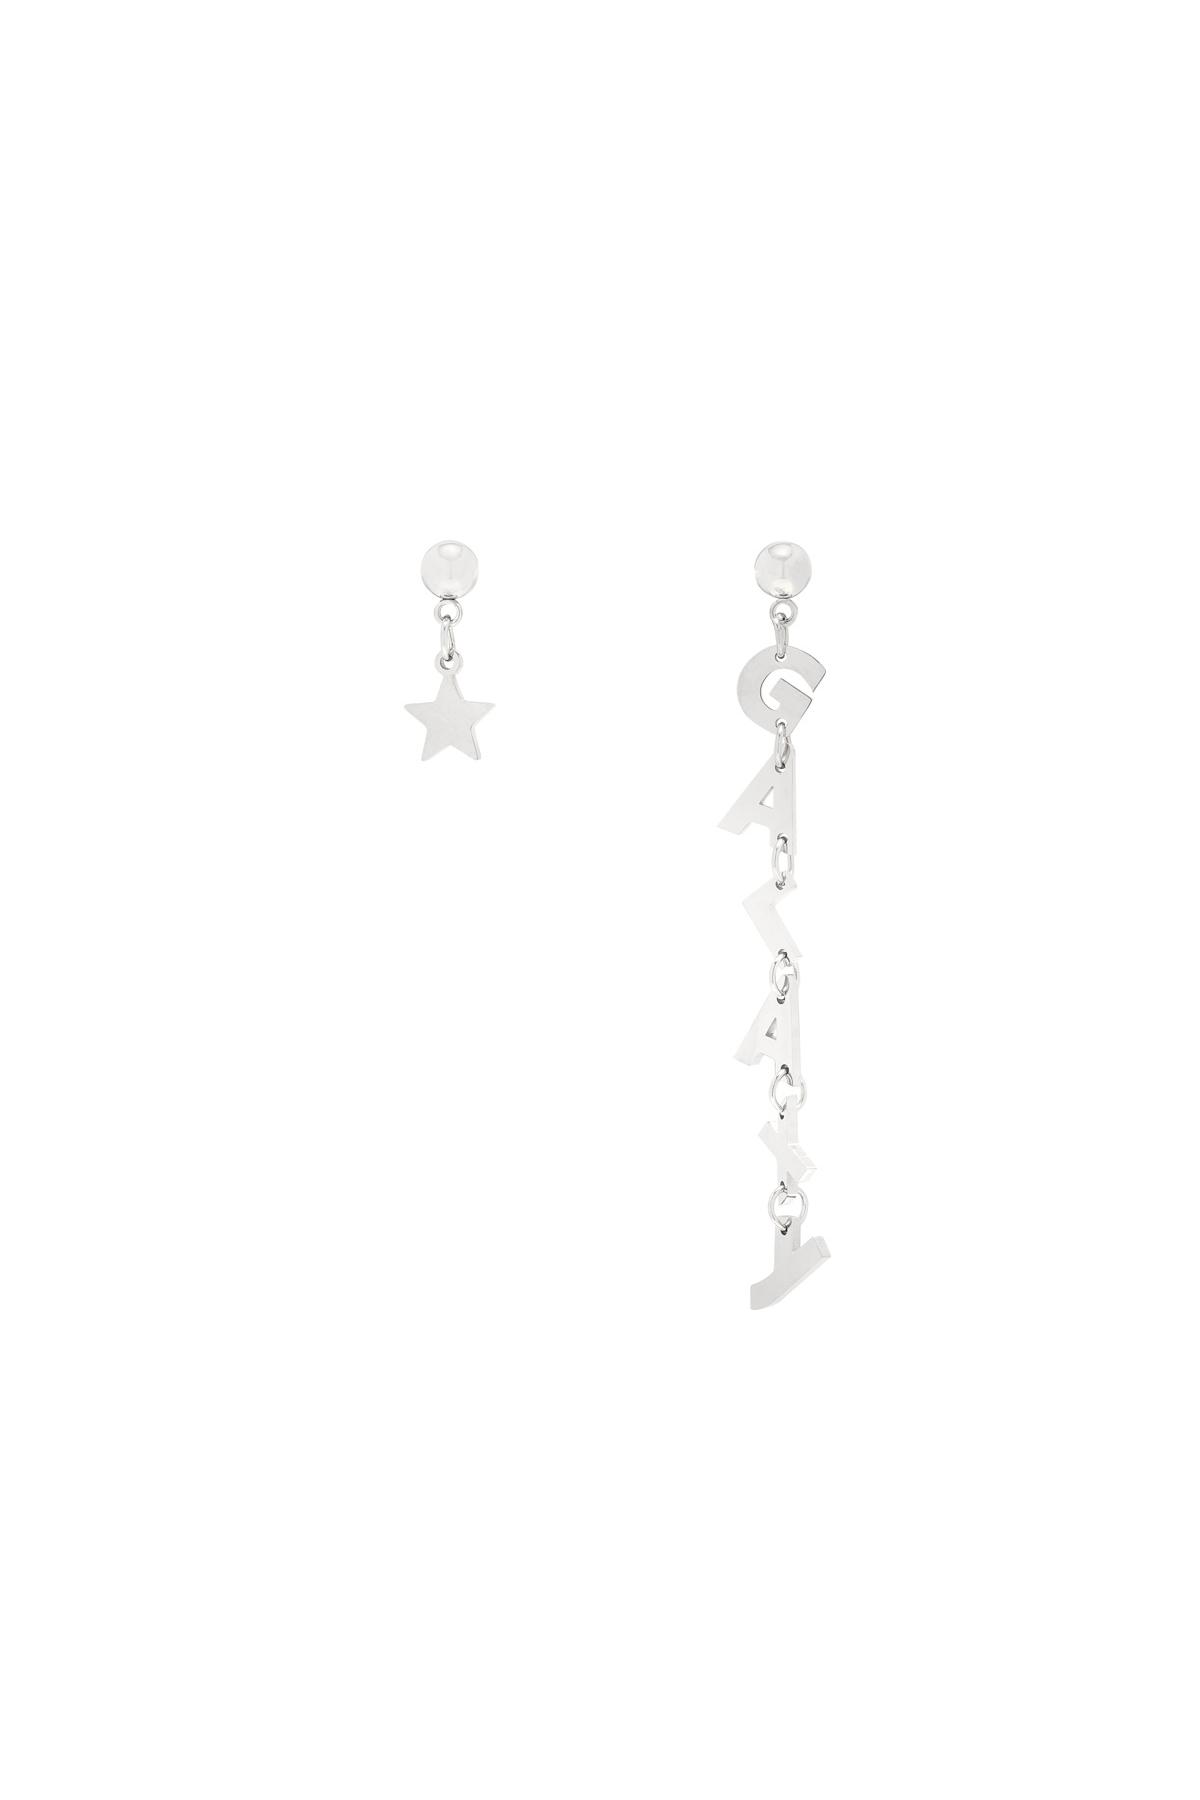 Earrings Galaxy Star Silver Stainless Steel h5 